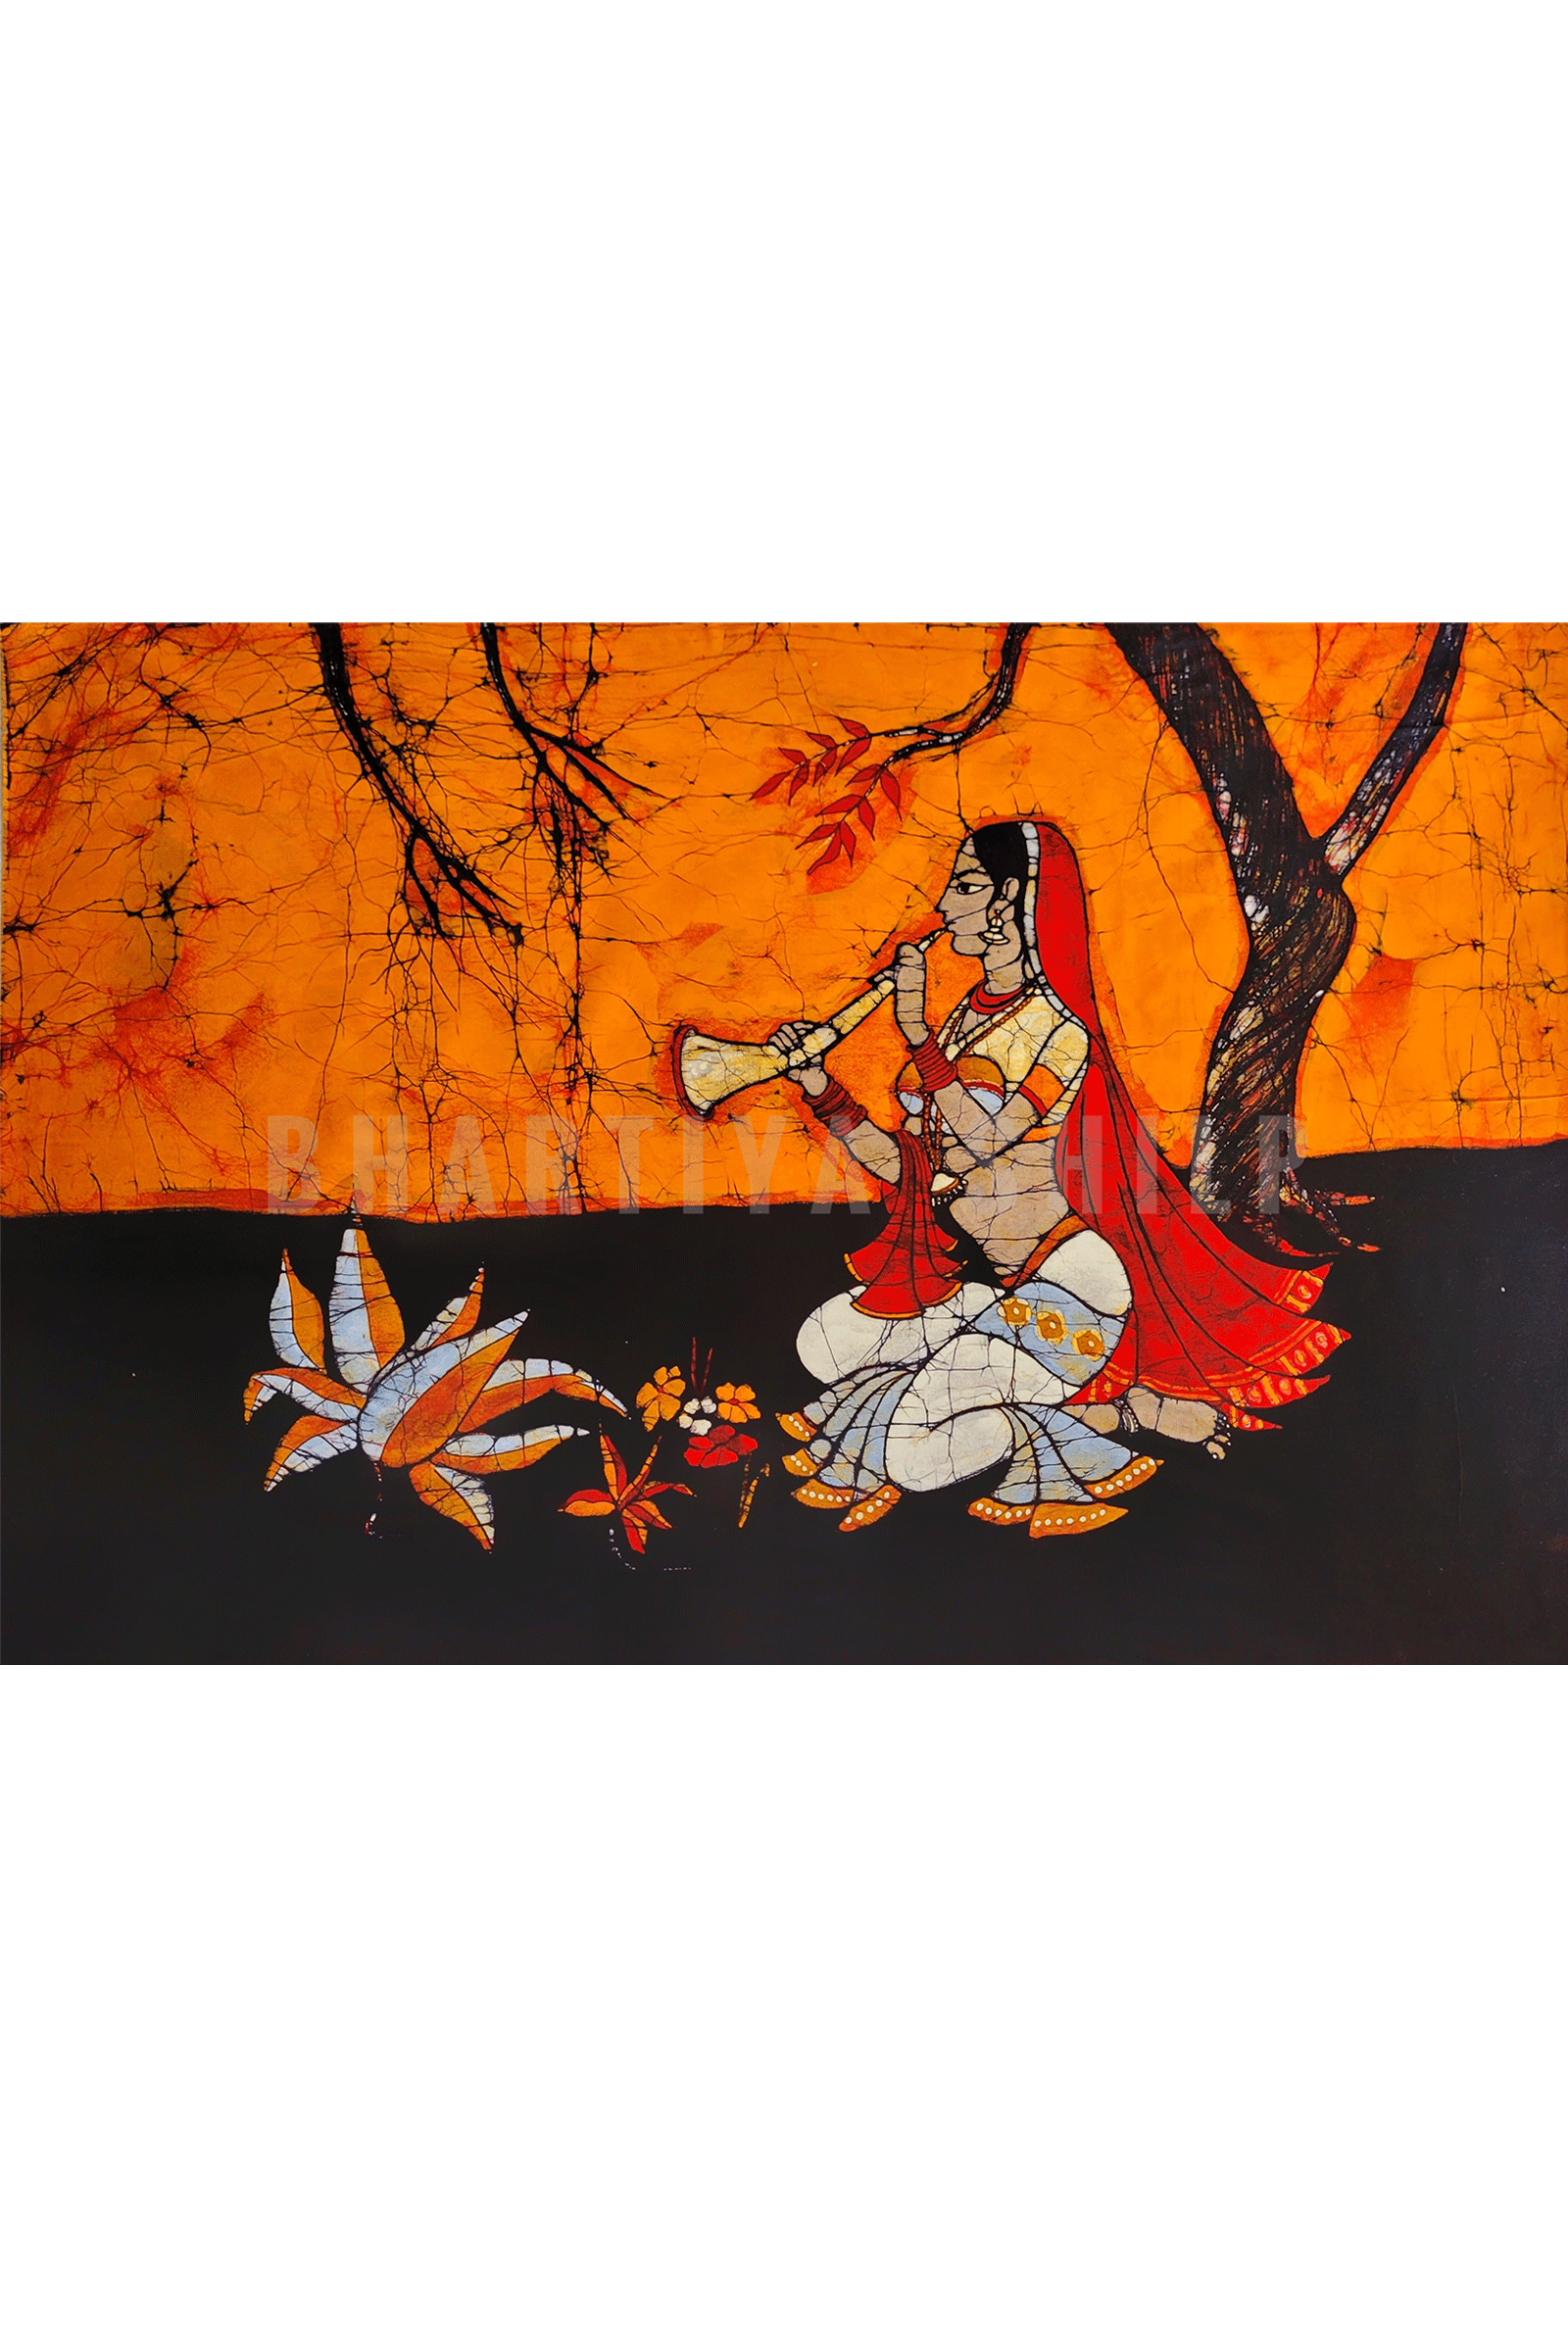 Handcrafted Batik Painting on Cloth 35.5 inch by 24 inch SKU-BS90005 - Bhartiya Shilp